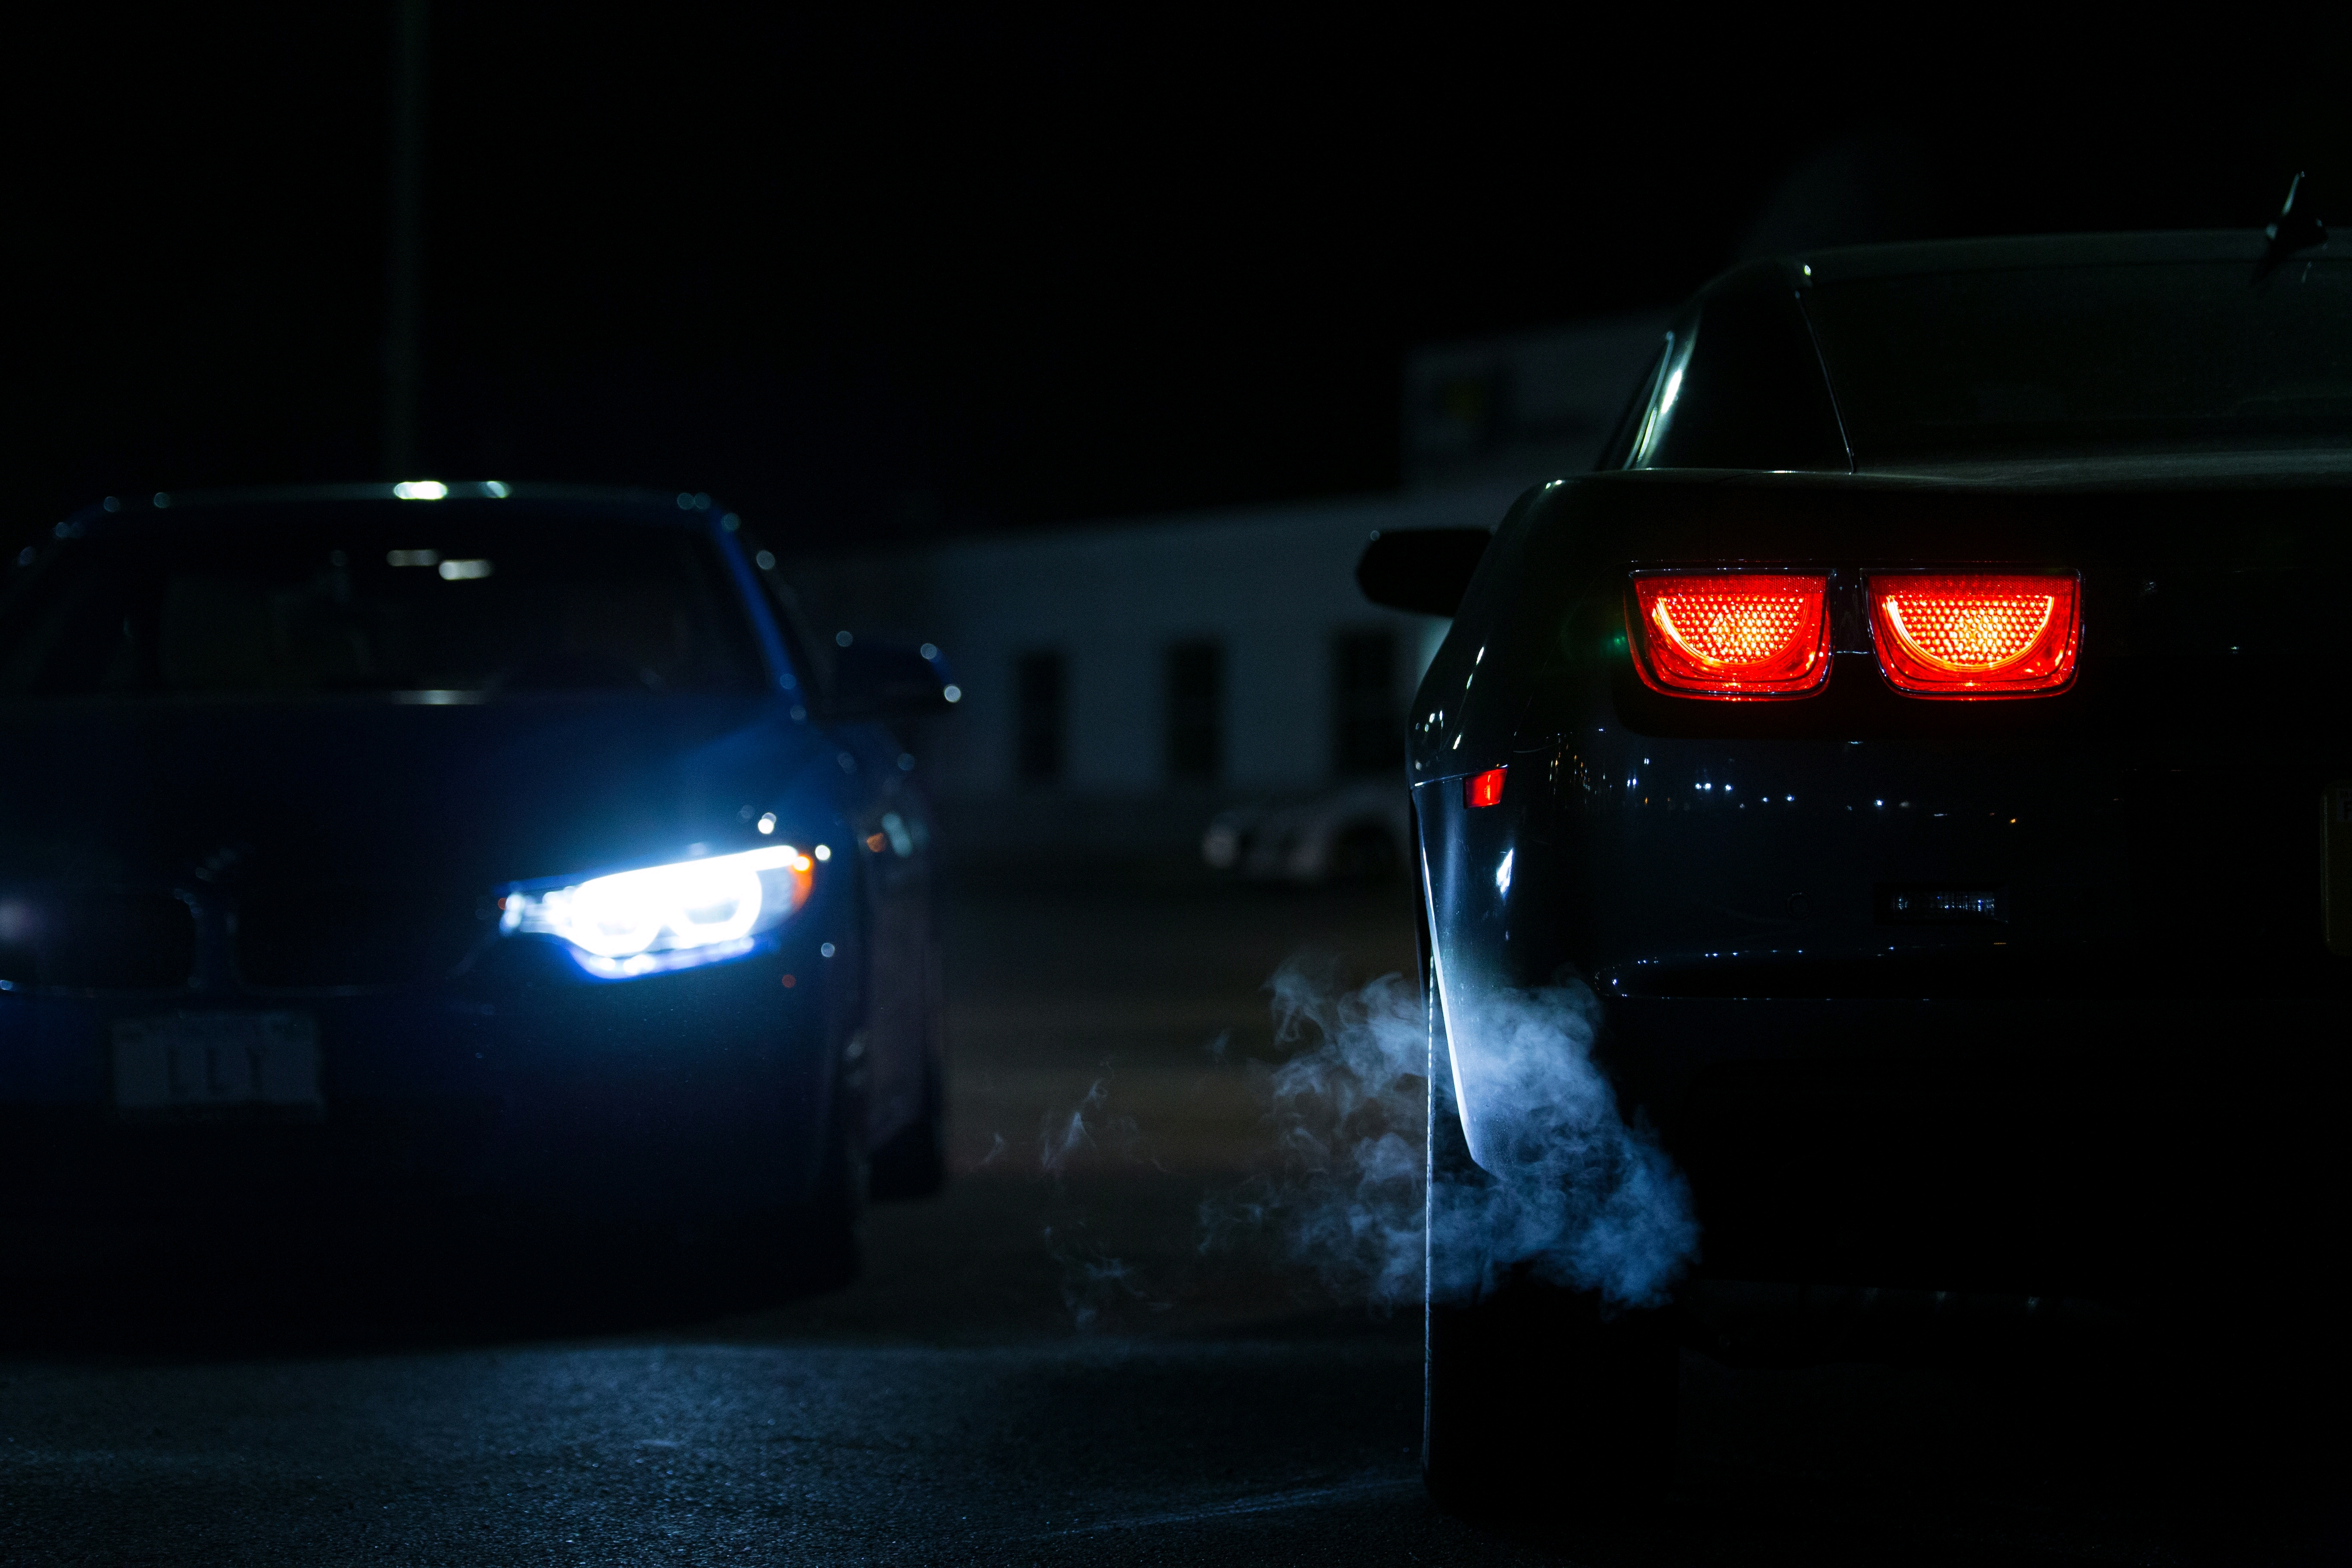 General 5472x3648 car BMW Chevrolet muscle cars dark night smoke lights BMW F80/F82/F83 taillights Chevrolet Camaro headlight beams